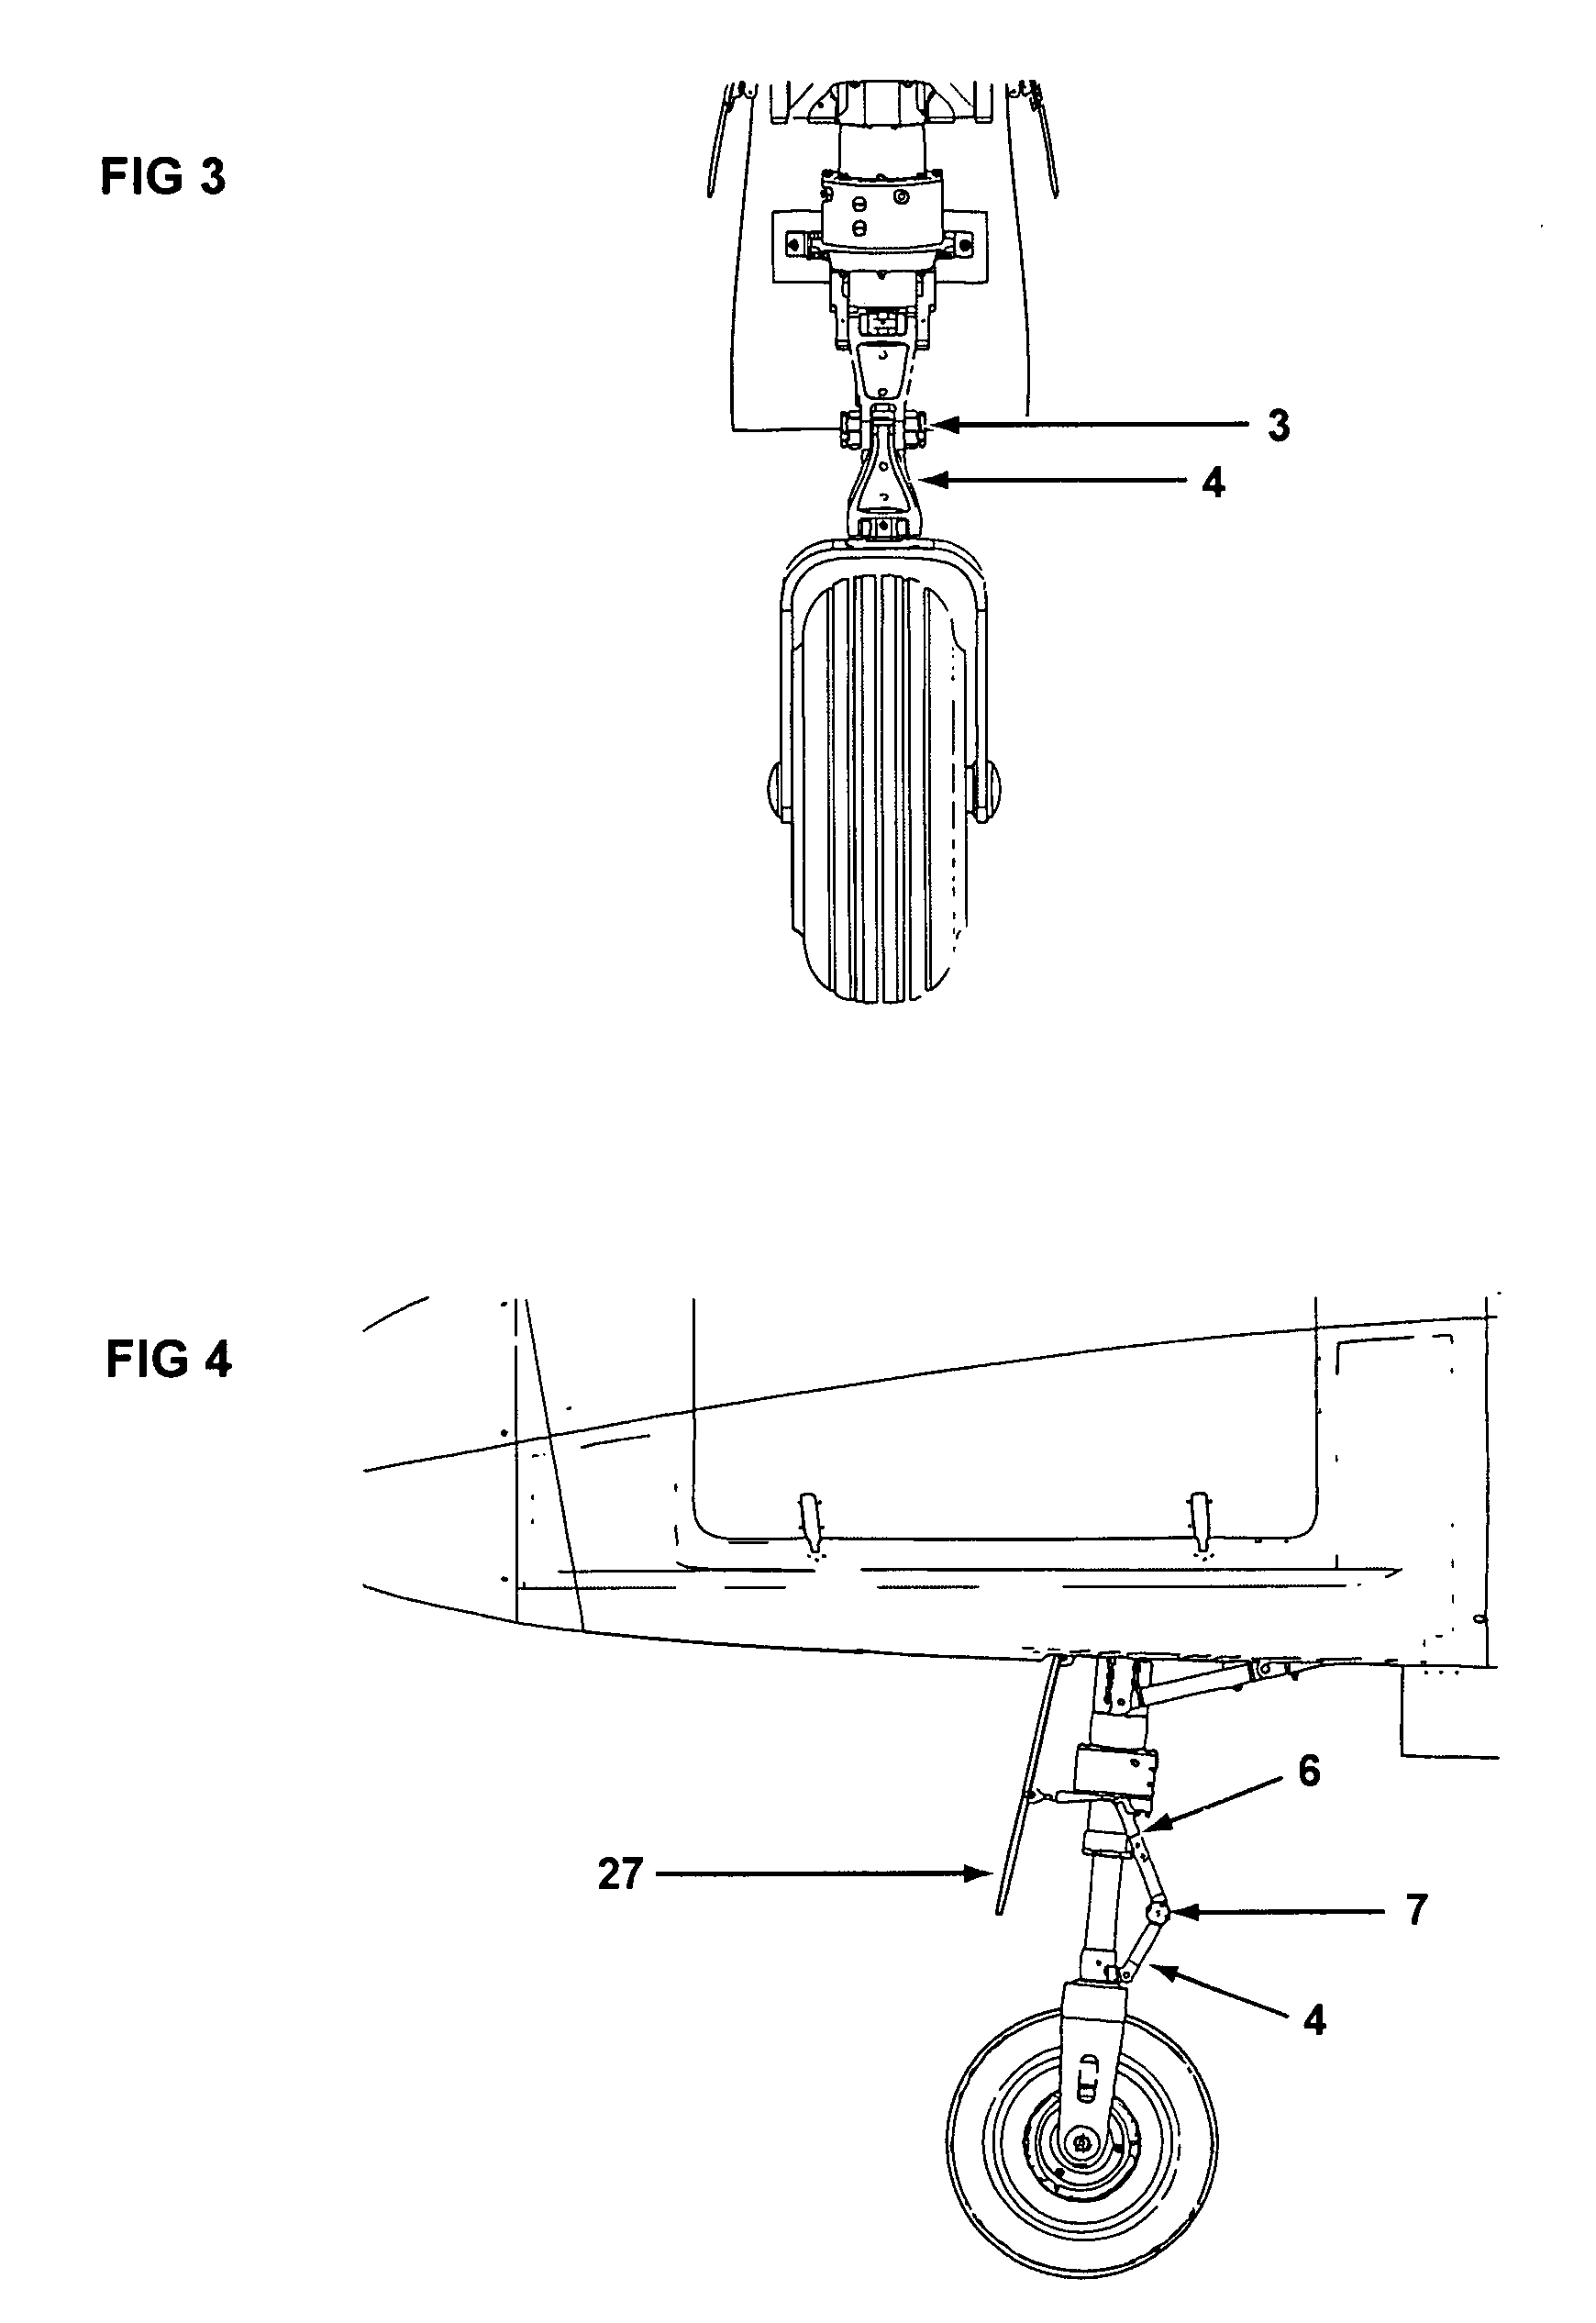 Aircraft nose gear control apparatus